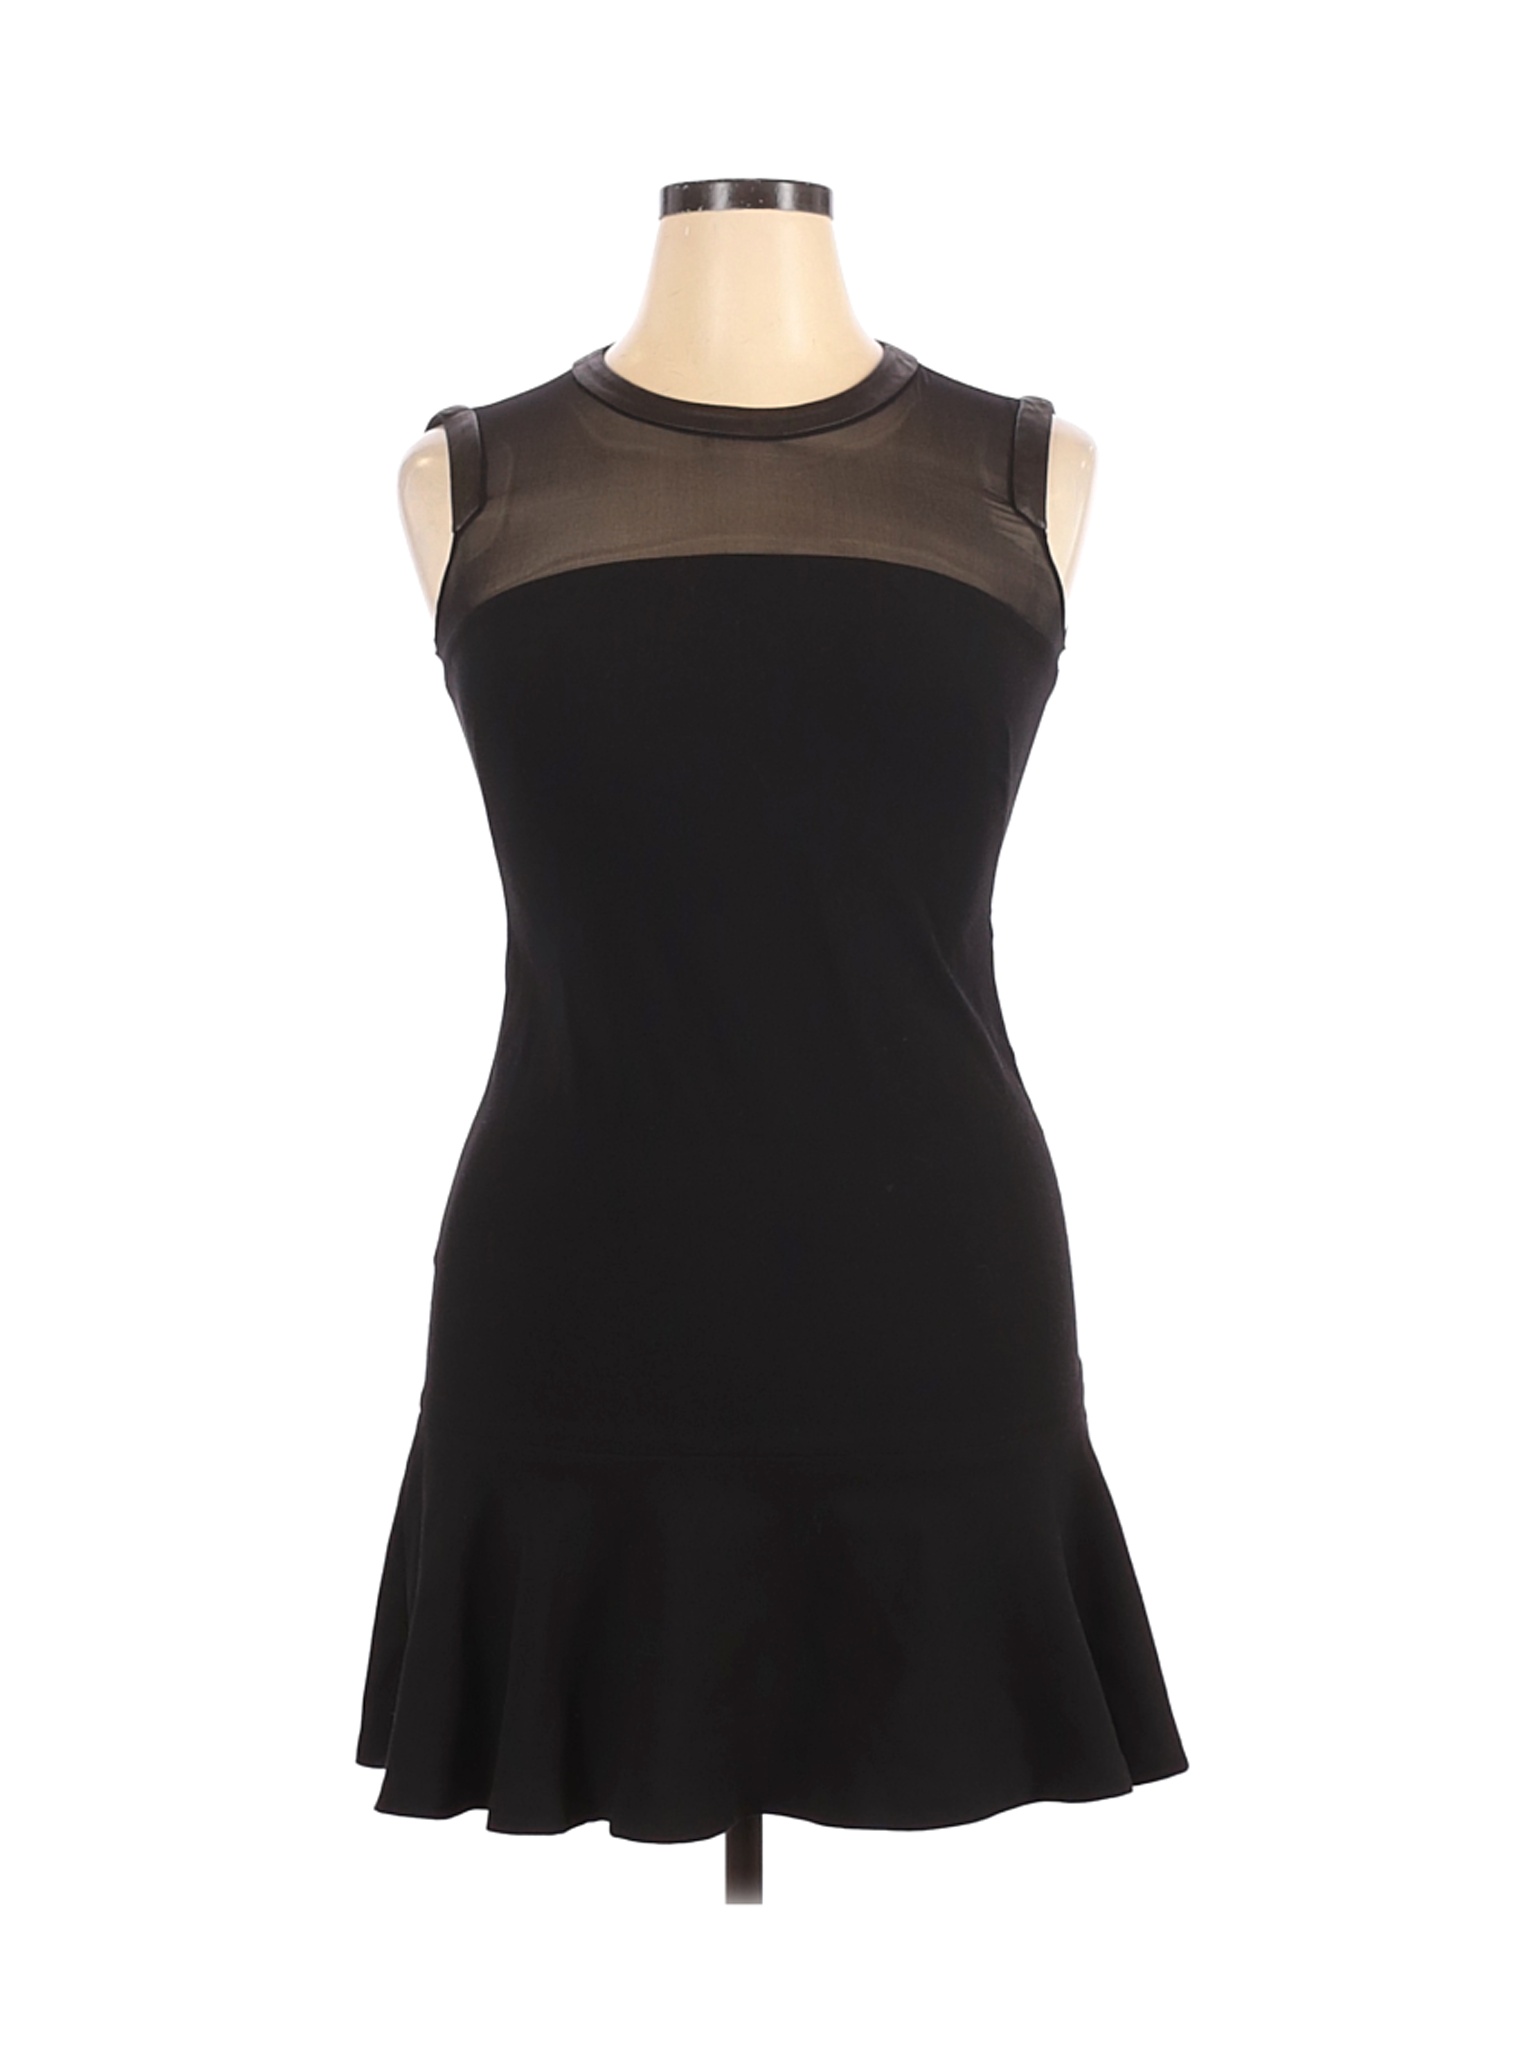 Sandro Women Black Casual Dress L | eBay